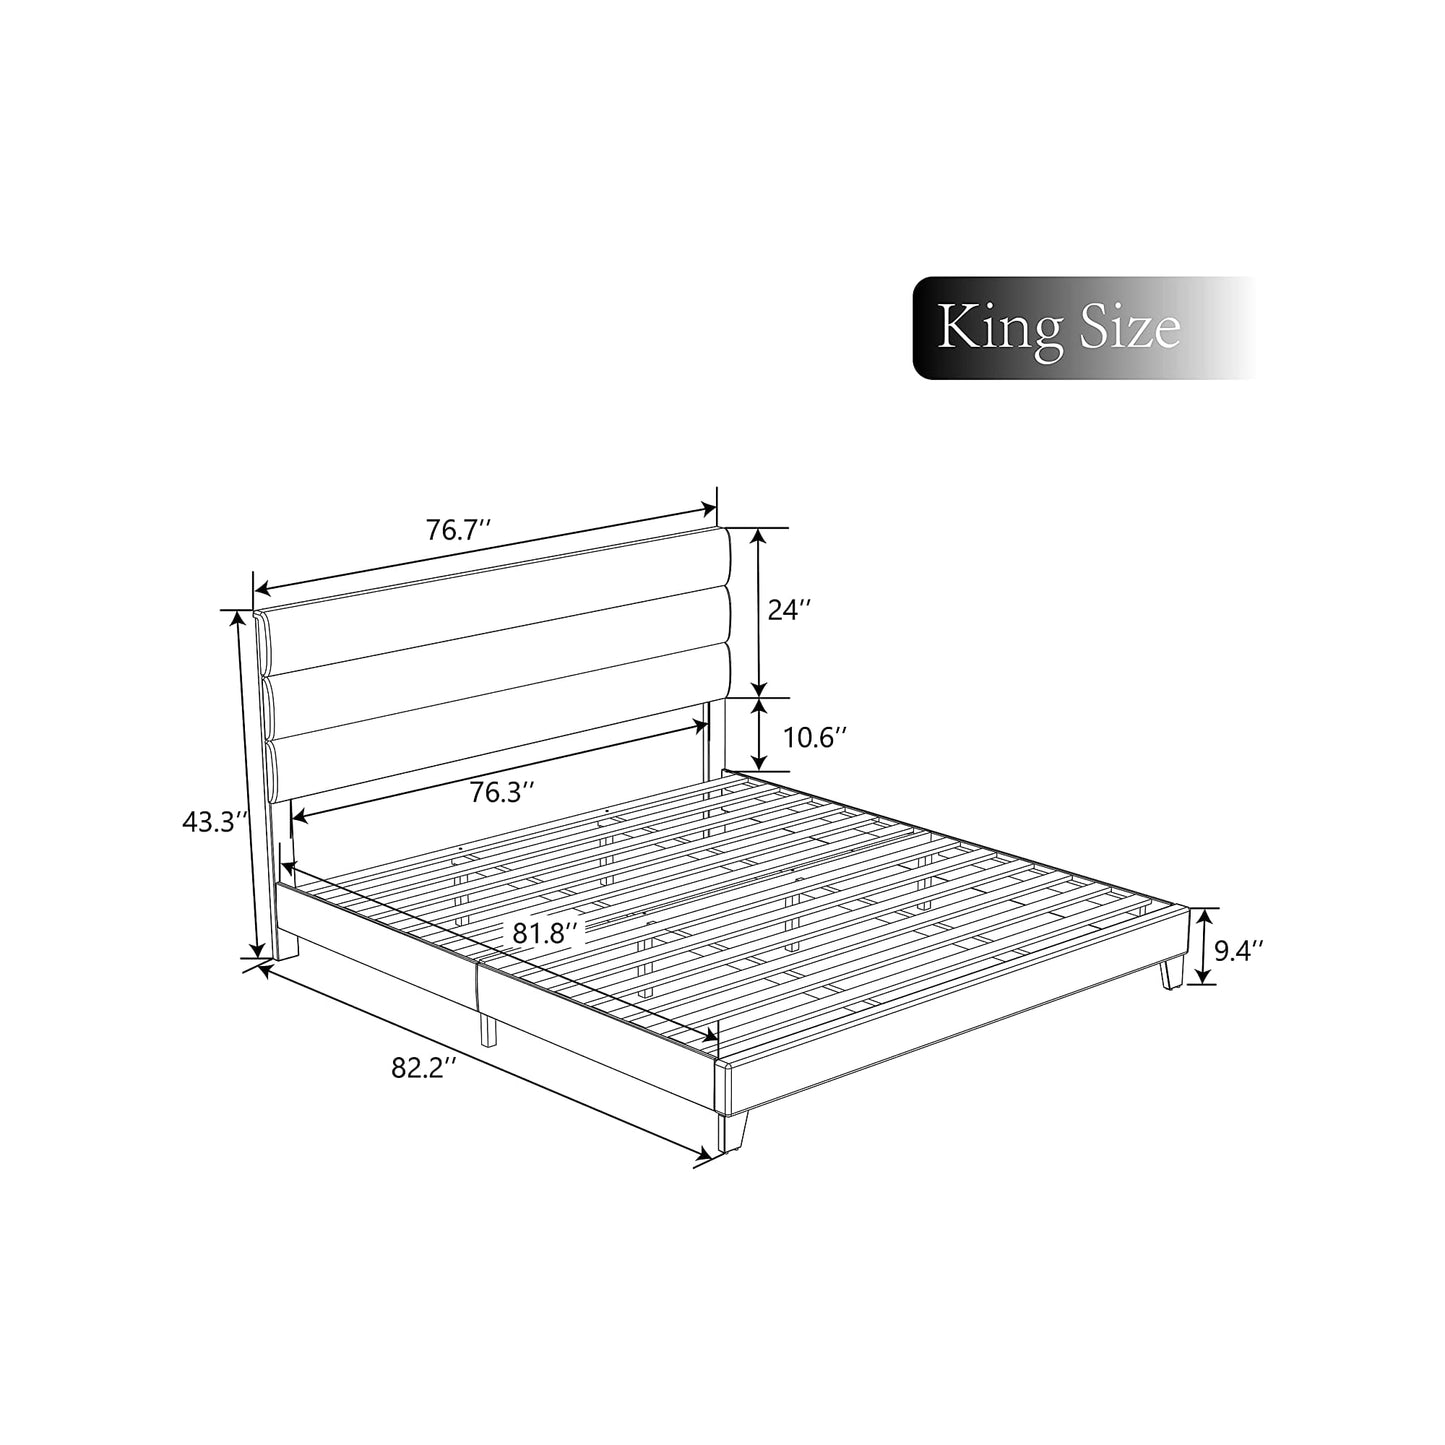 Allewie King Fully Upholstered Platform Bed Frame with Headboard, Dark Grey